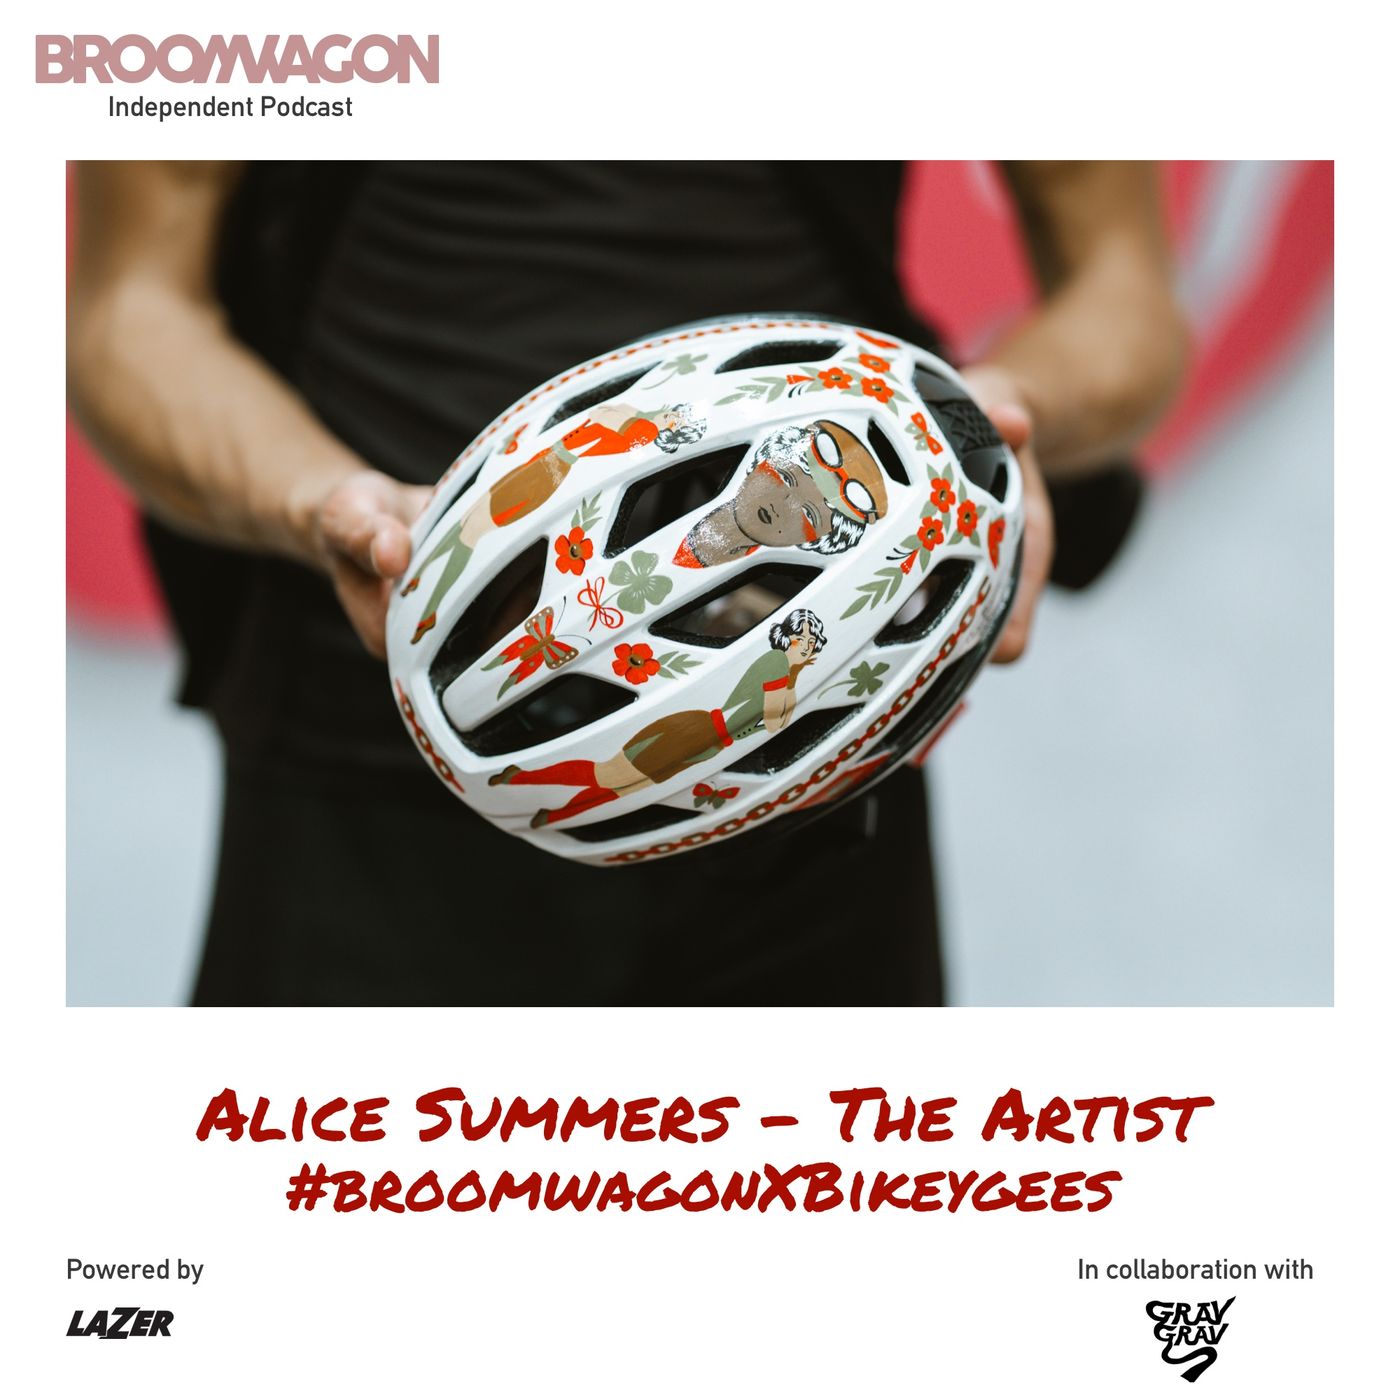 Alice Summers – The Artist #broomwagonXBikeygees